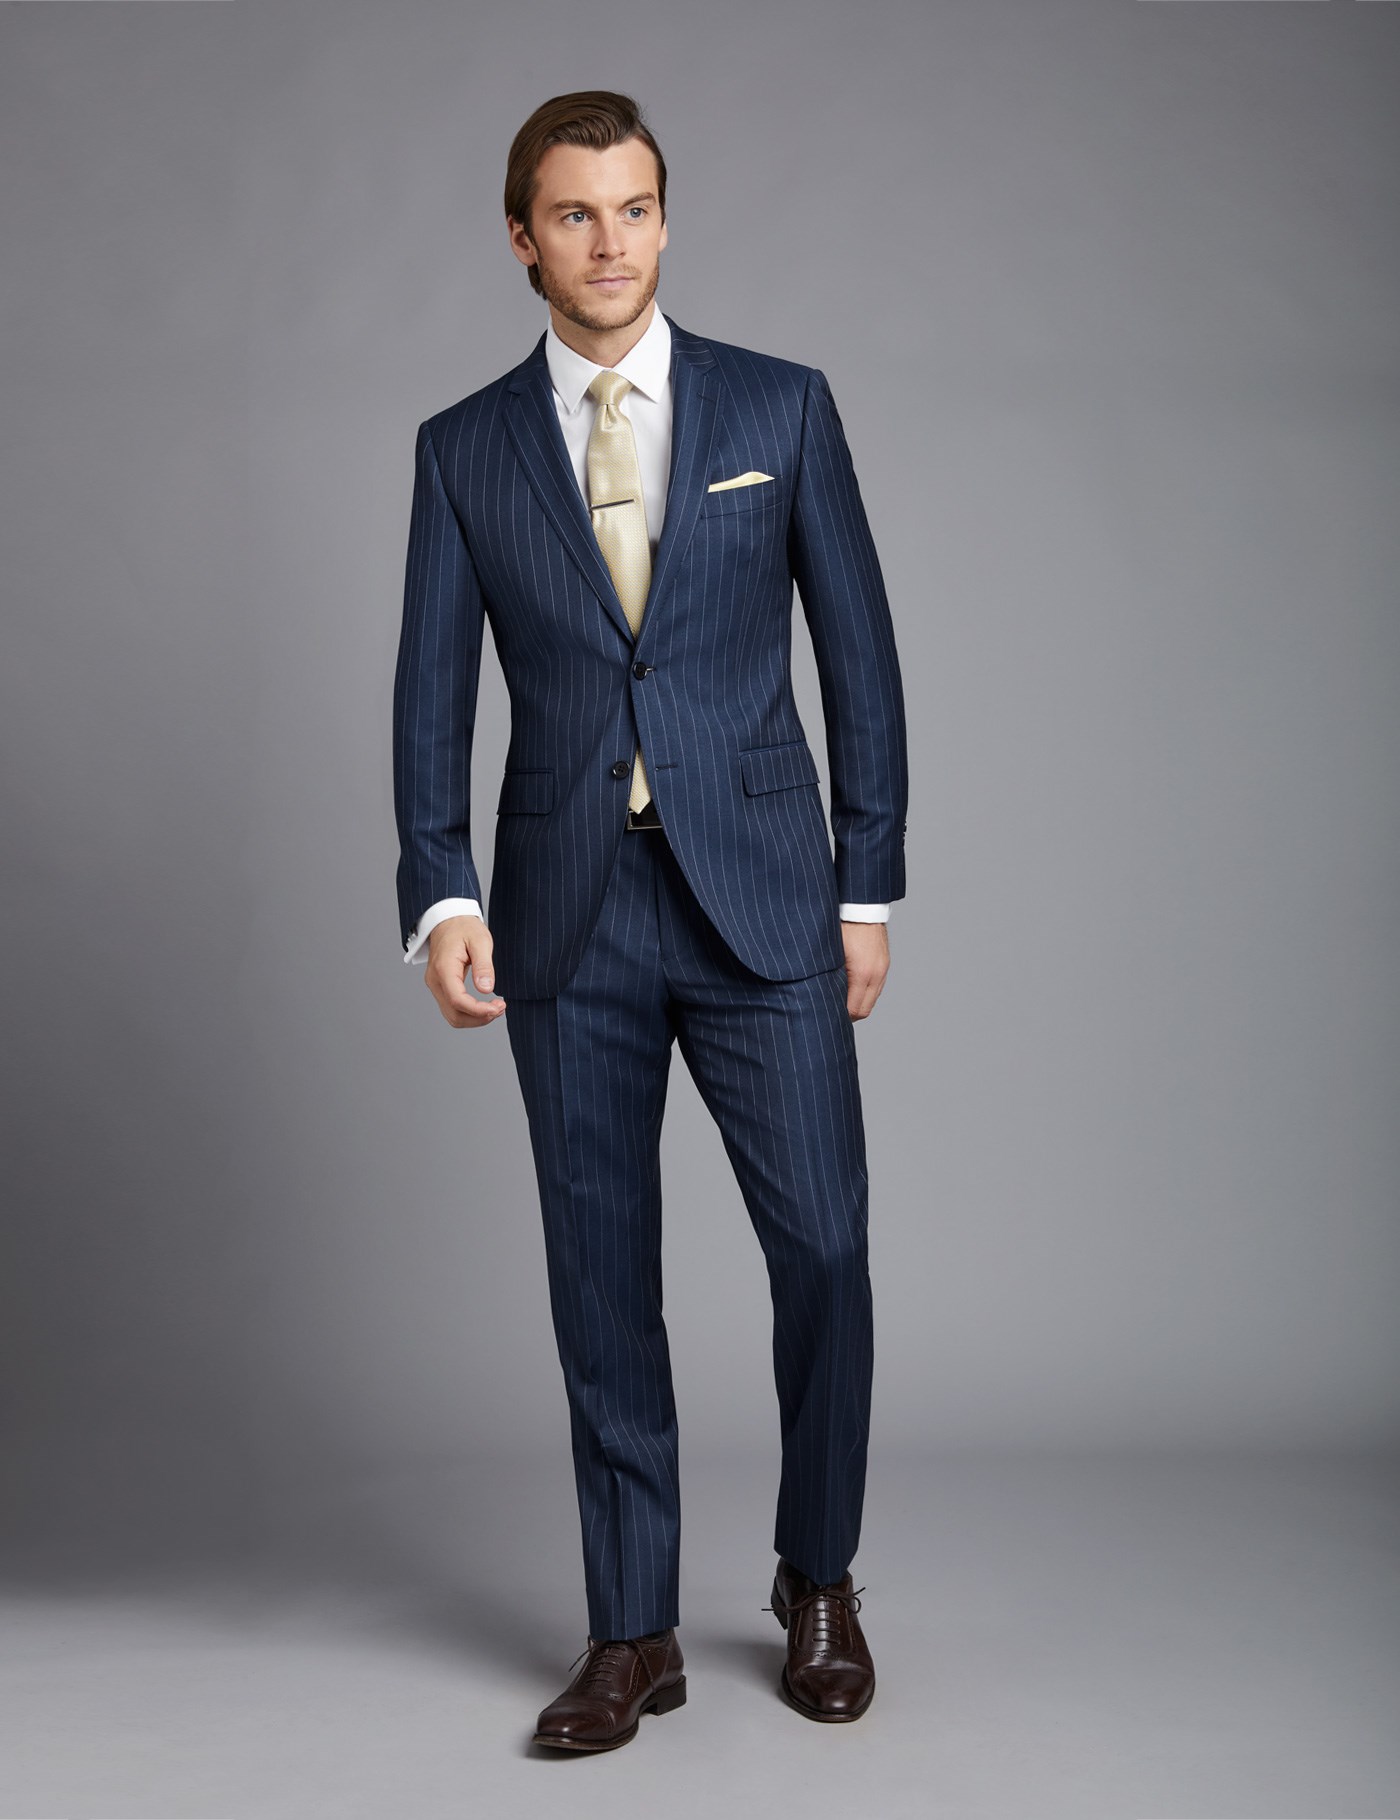 Pinstripe suit for sale